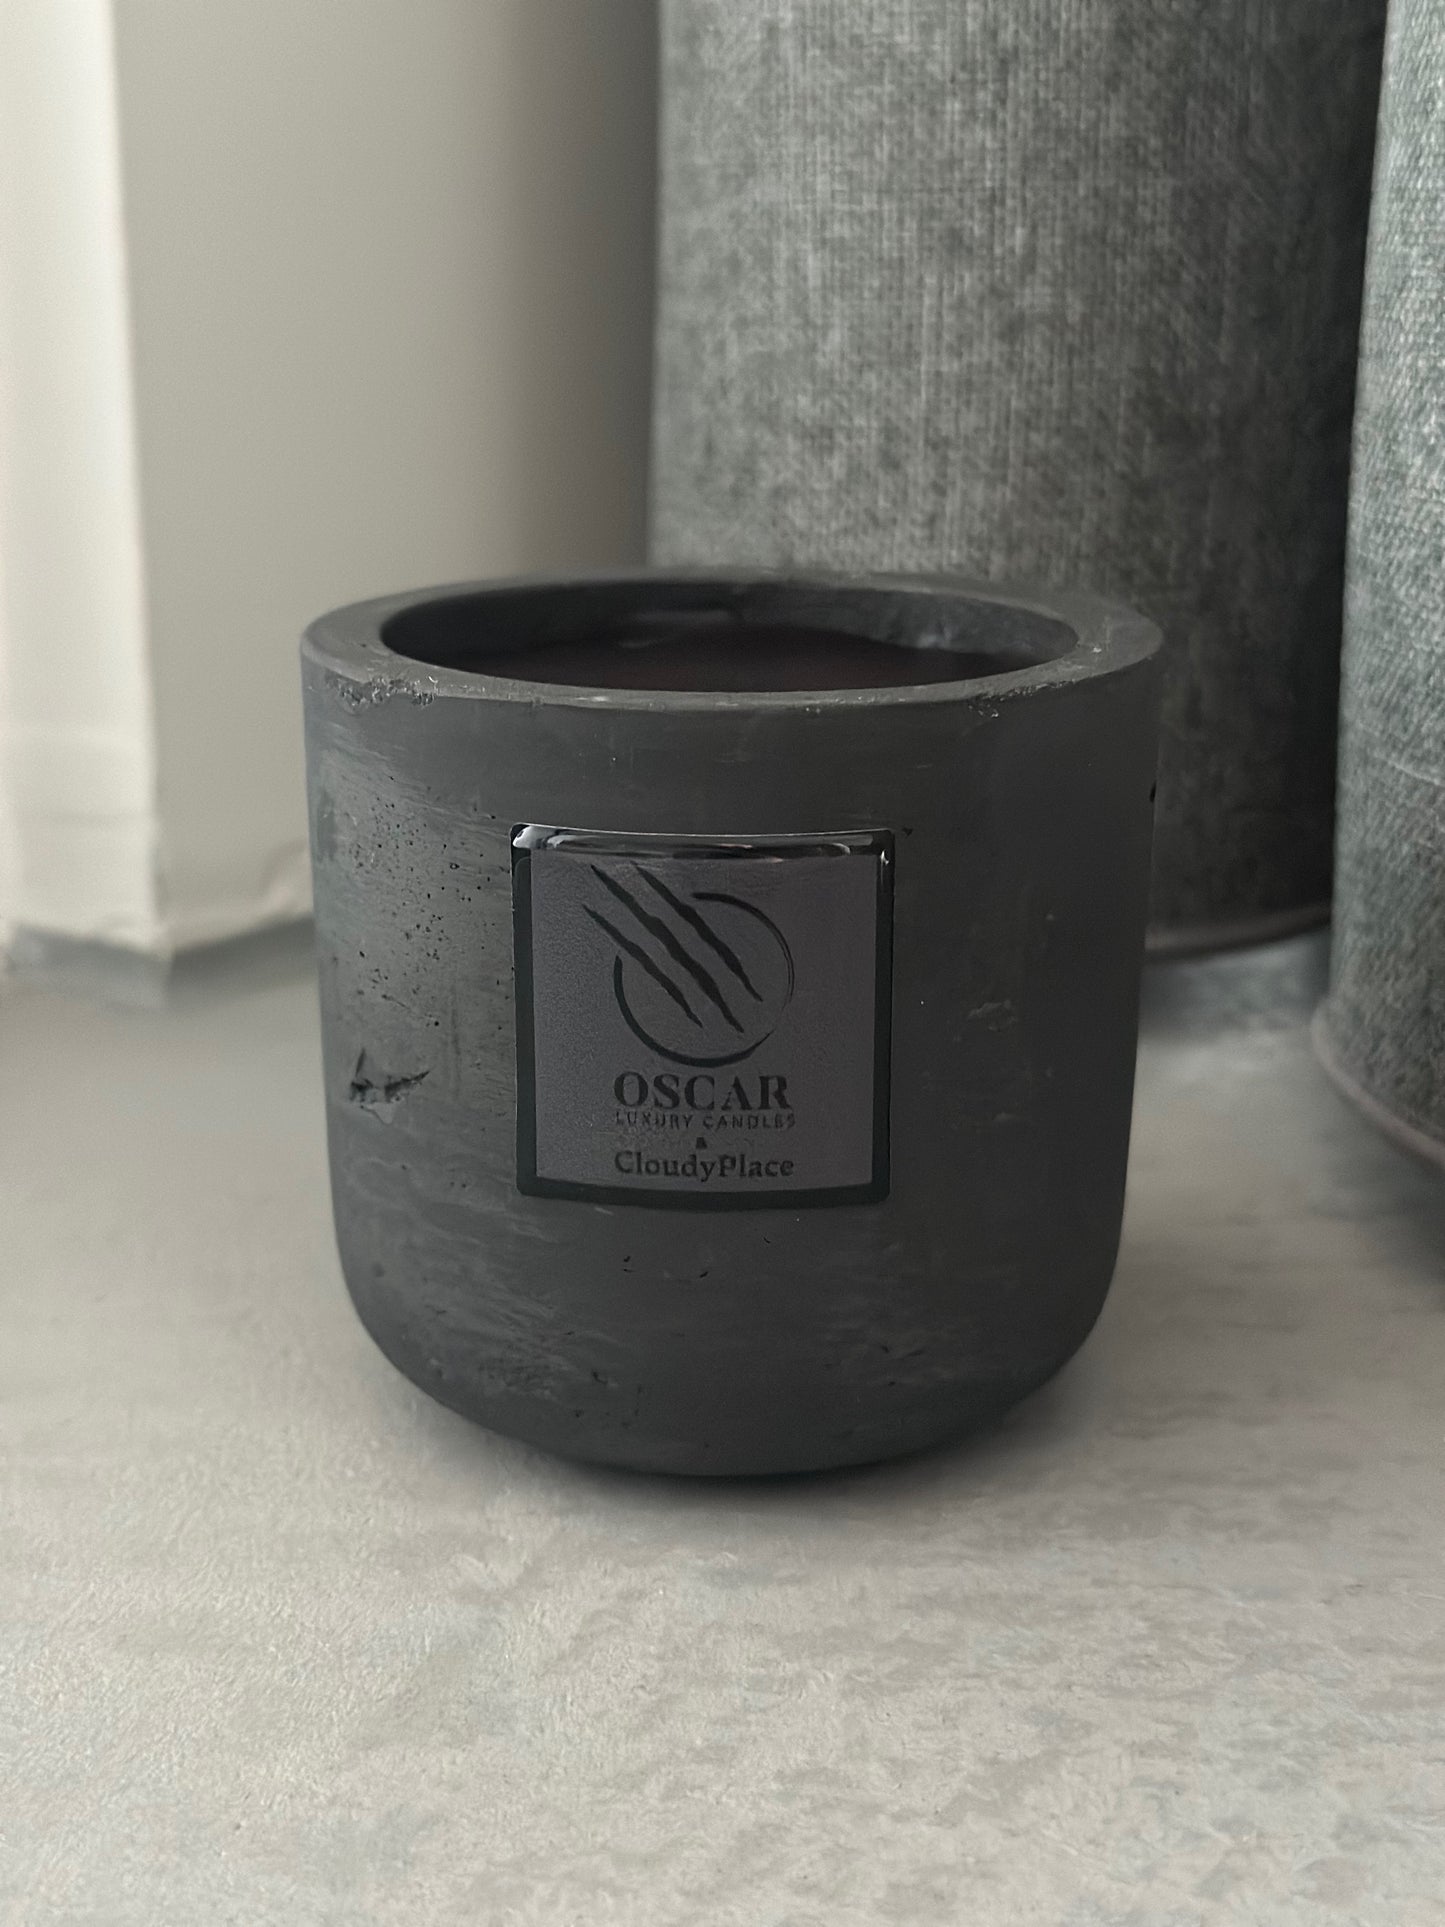 Set lampe chauffe-bougie avec OSCAR Luxury (Serendipity)